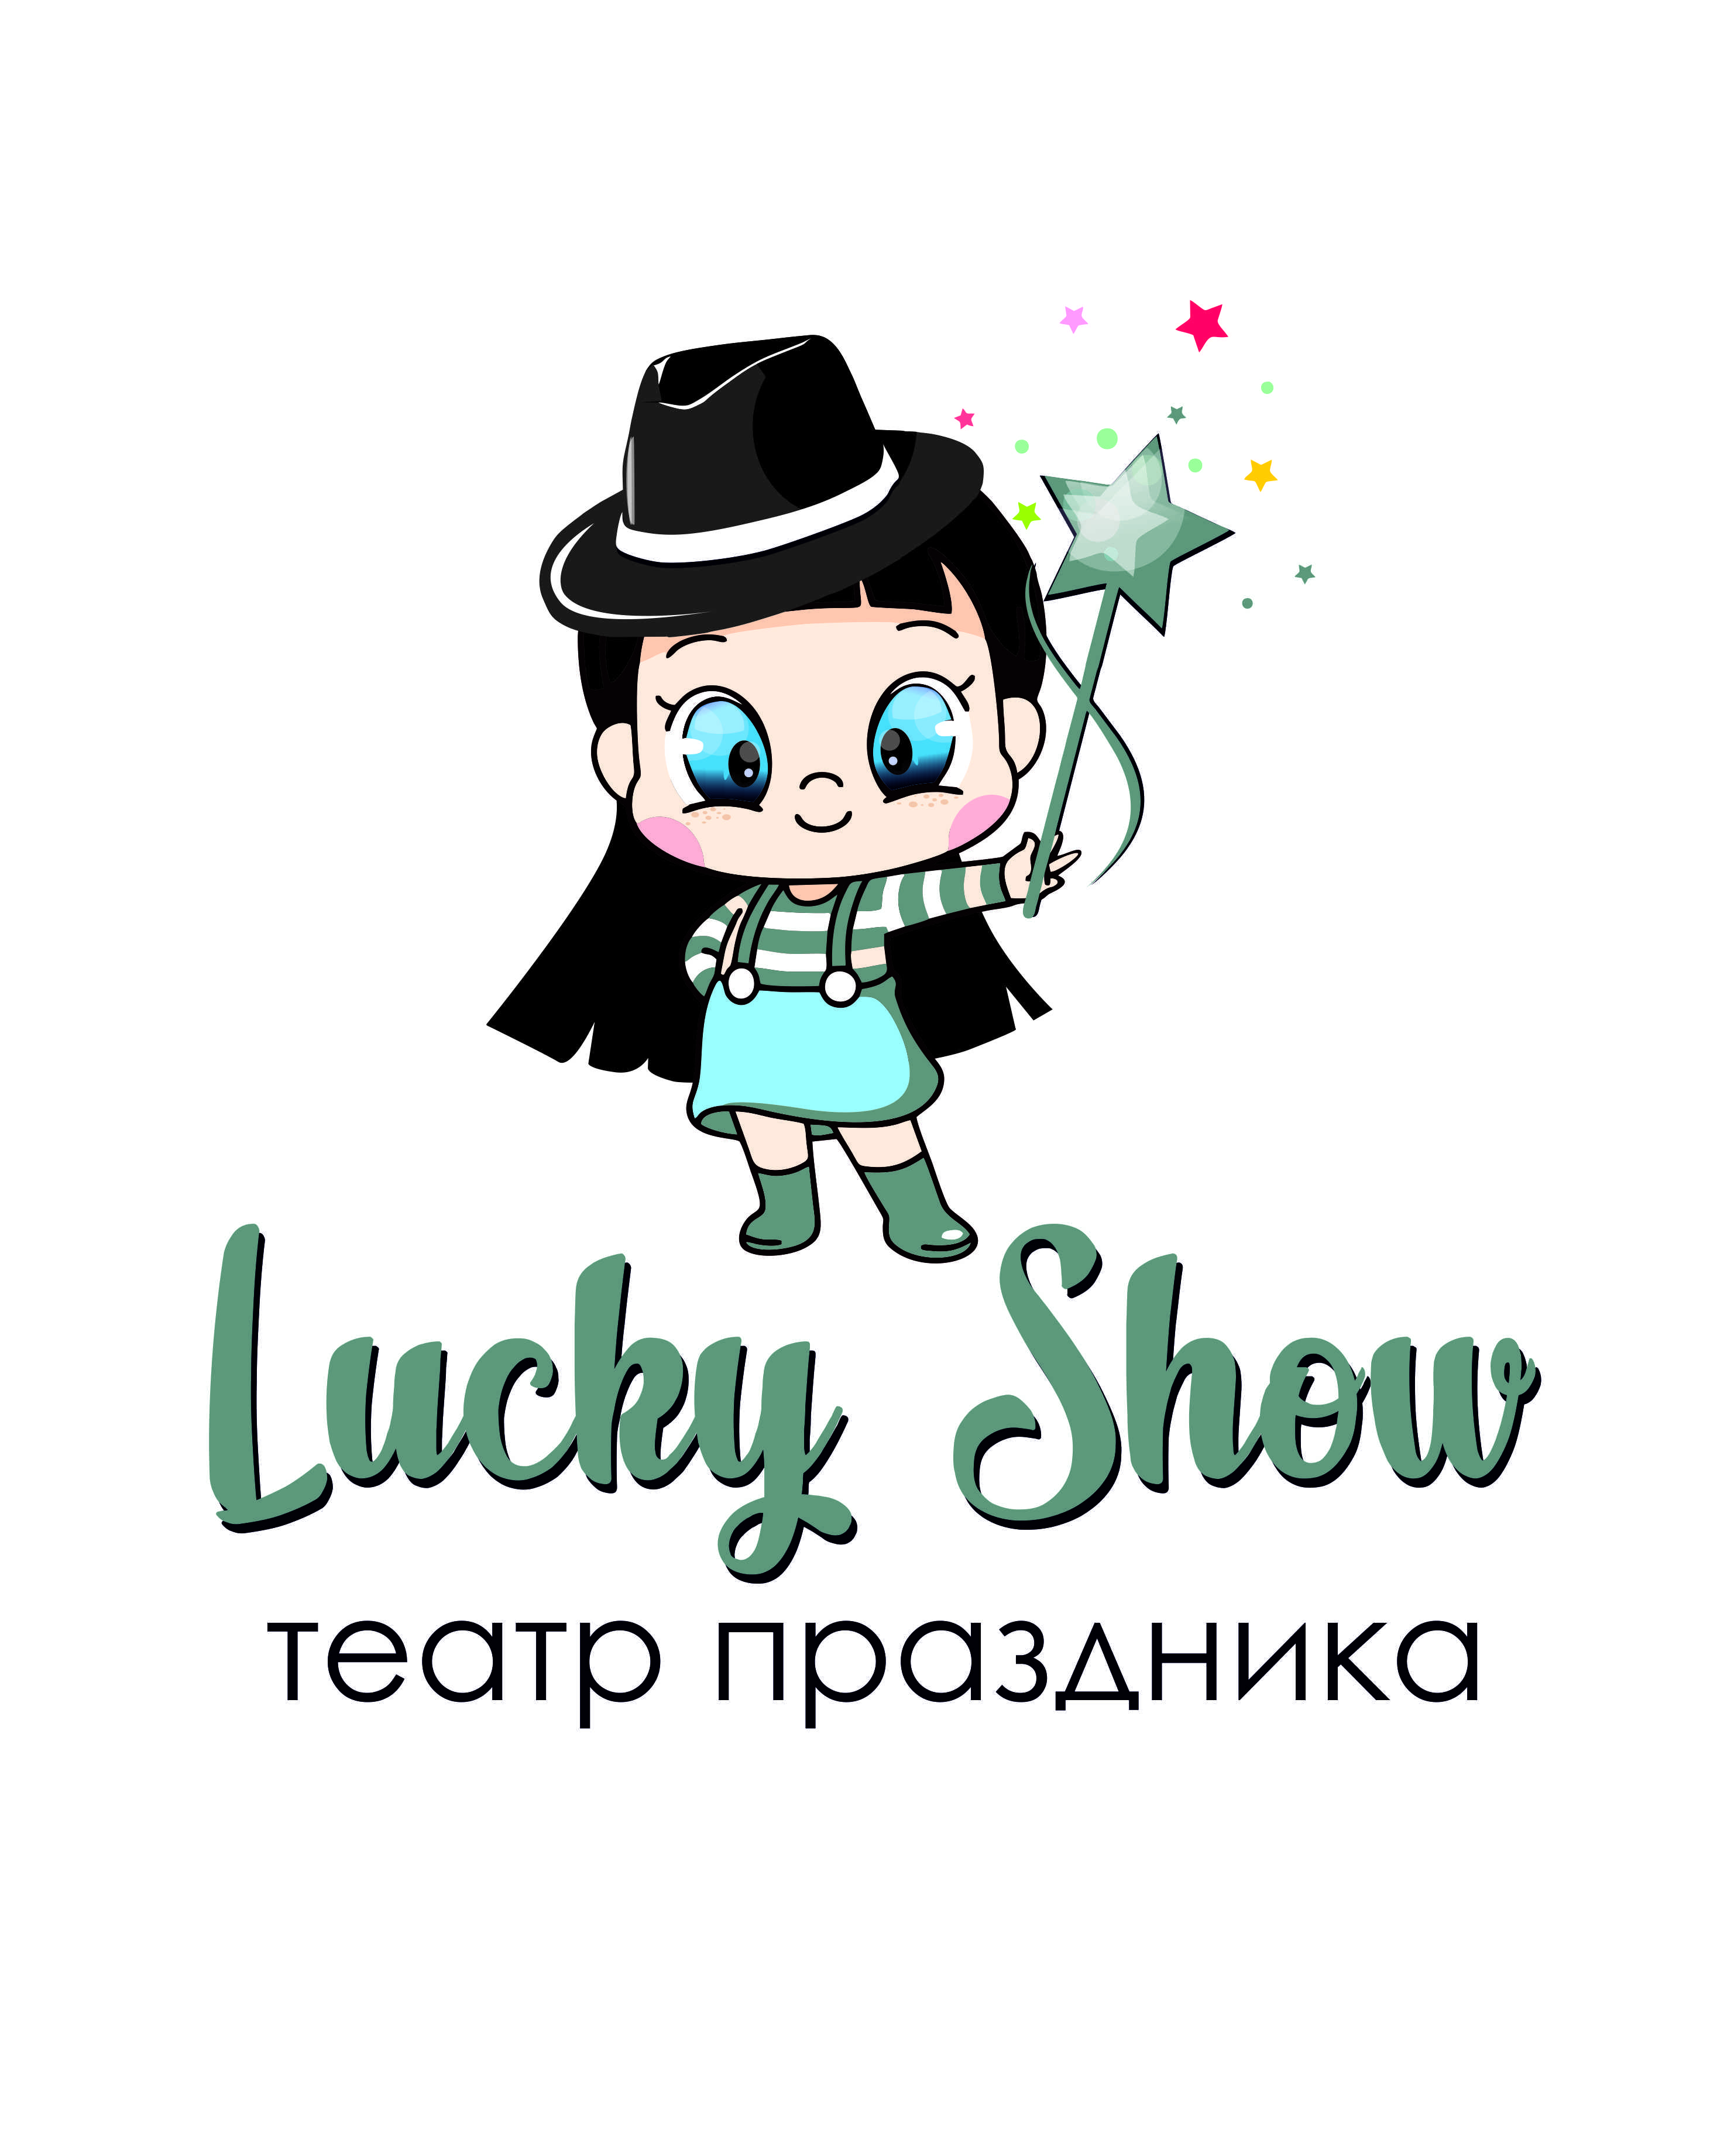 Lucky show